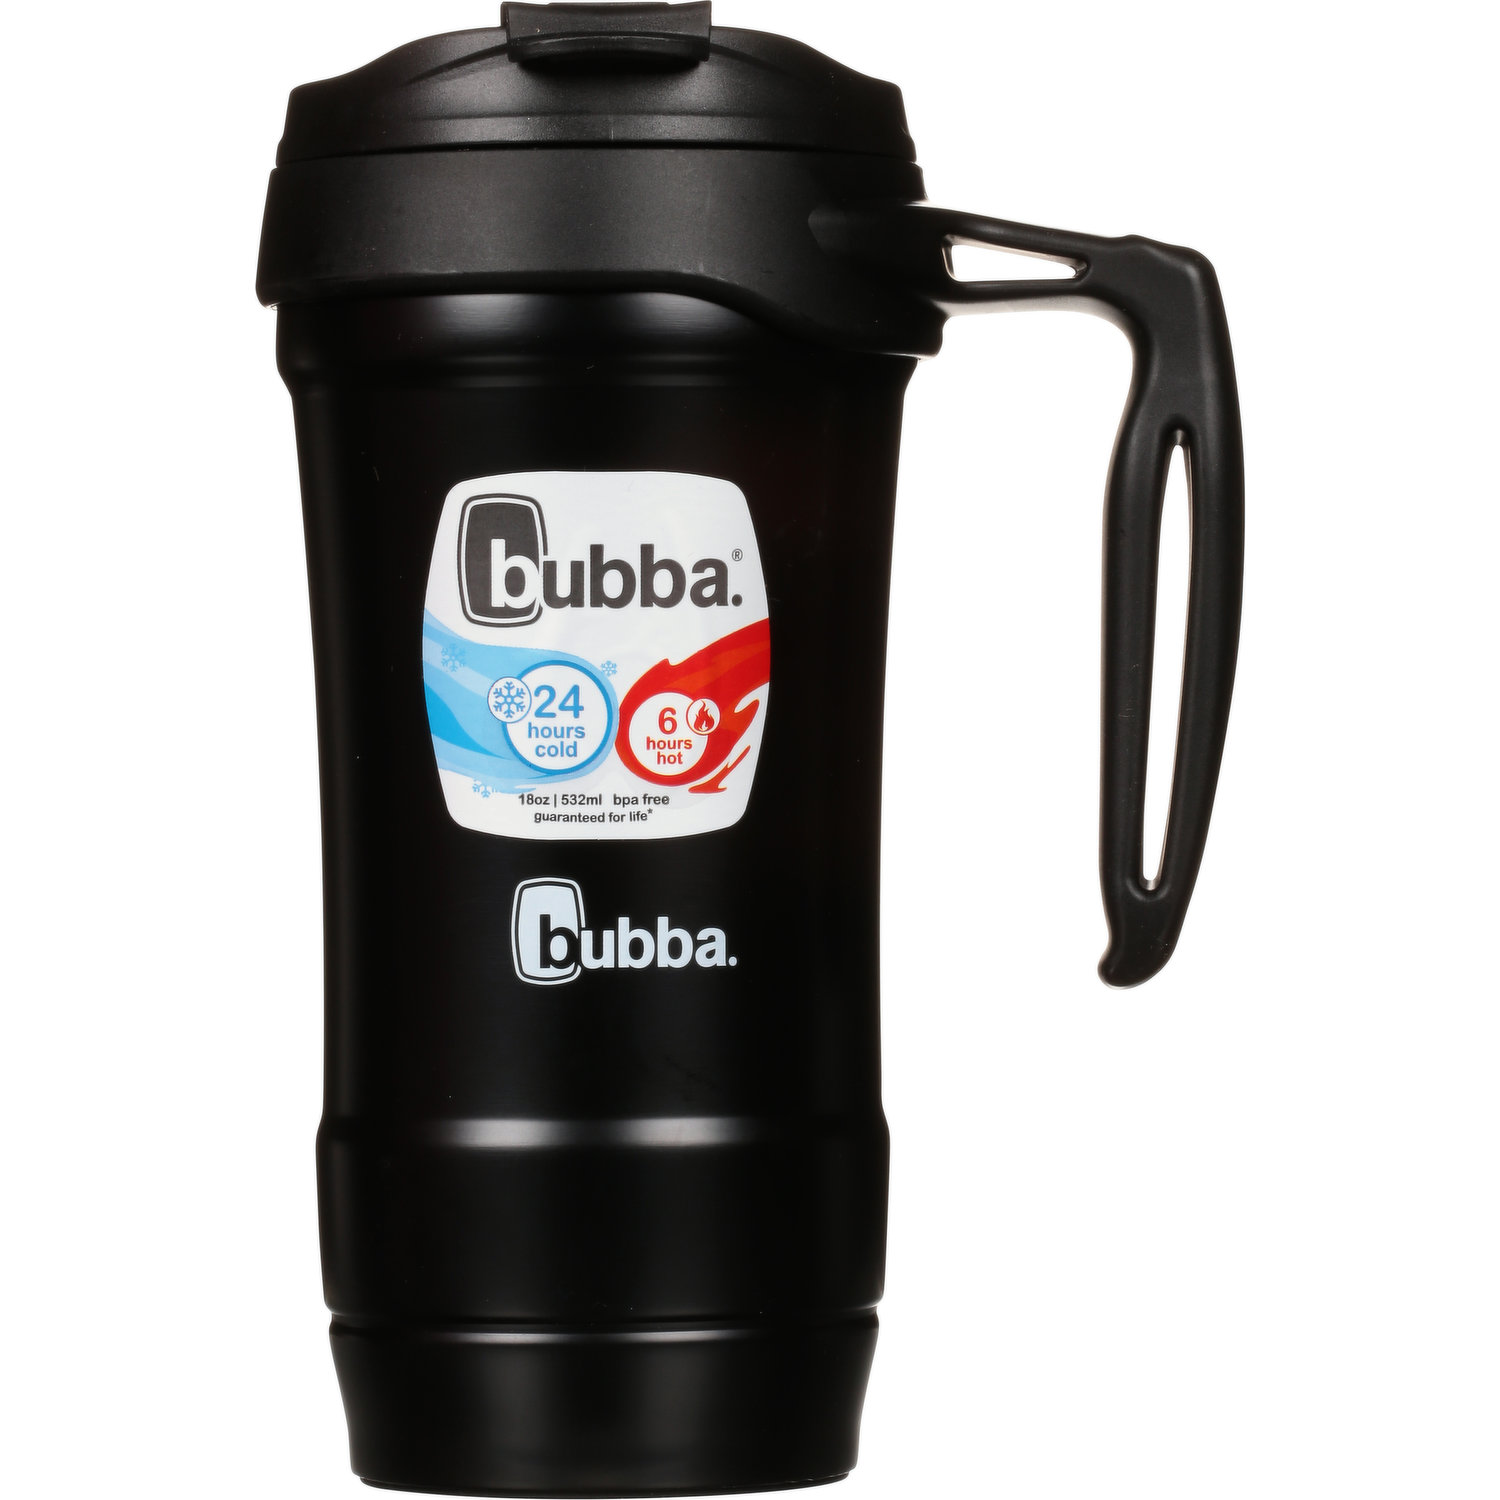 bubba HERO sport bottle replacement lid